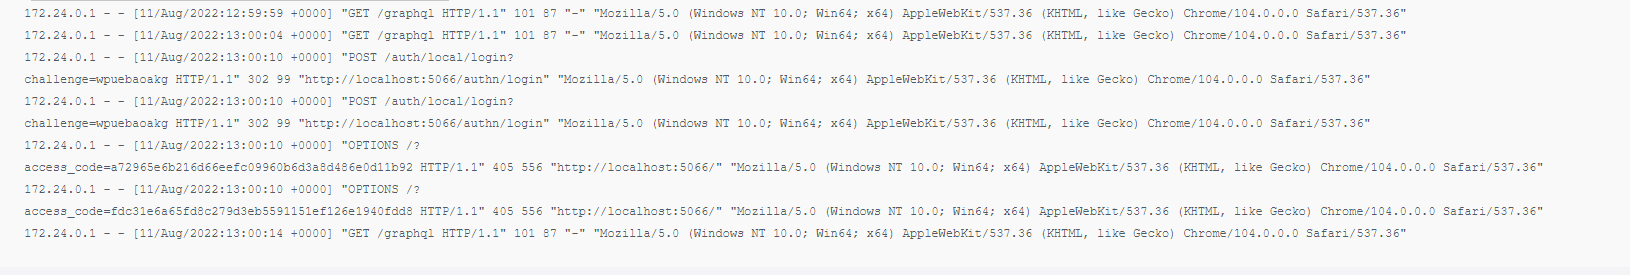 Speckle front end 4 - Speckle Server logs 2